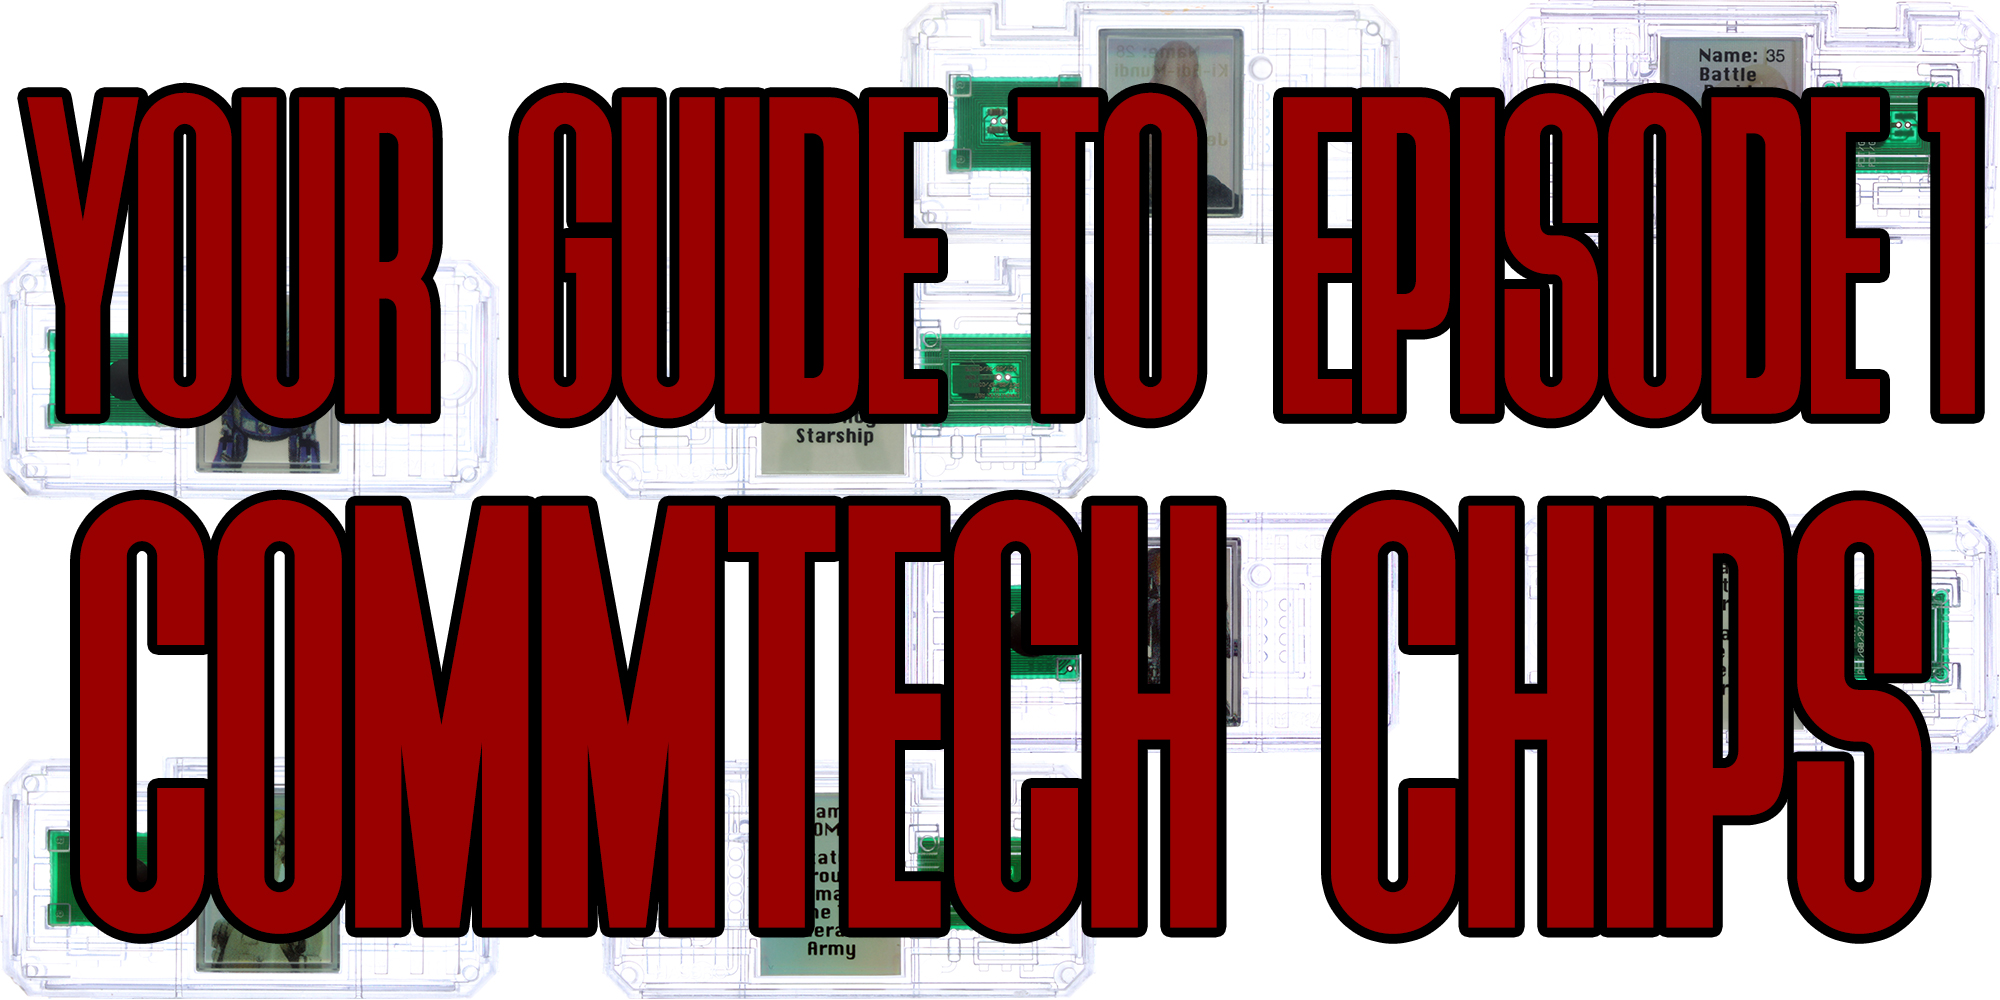 CommTech Guide